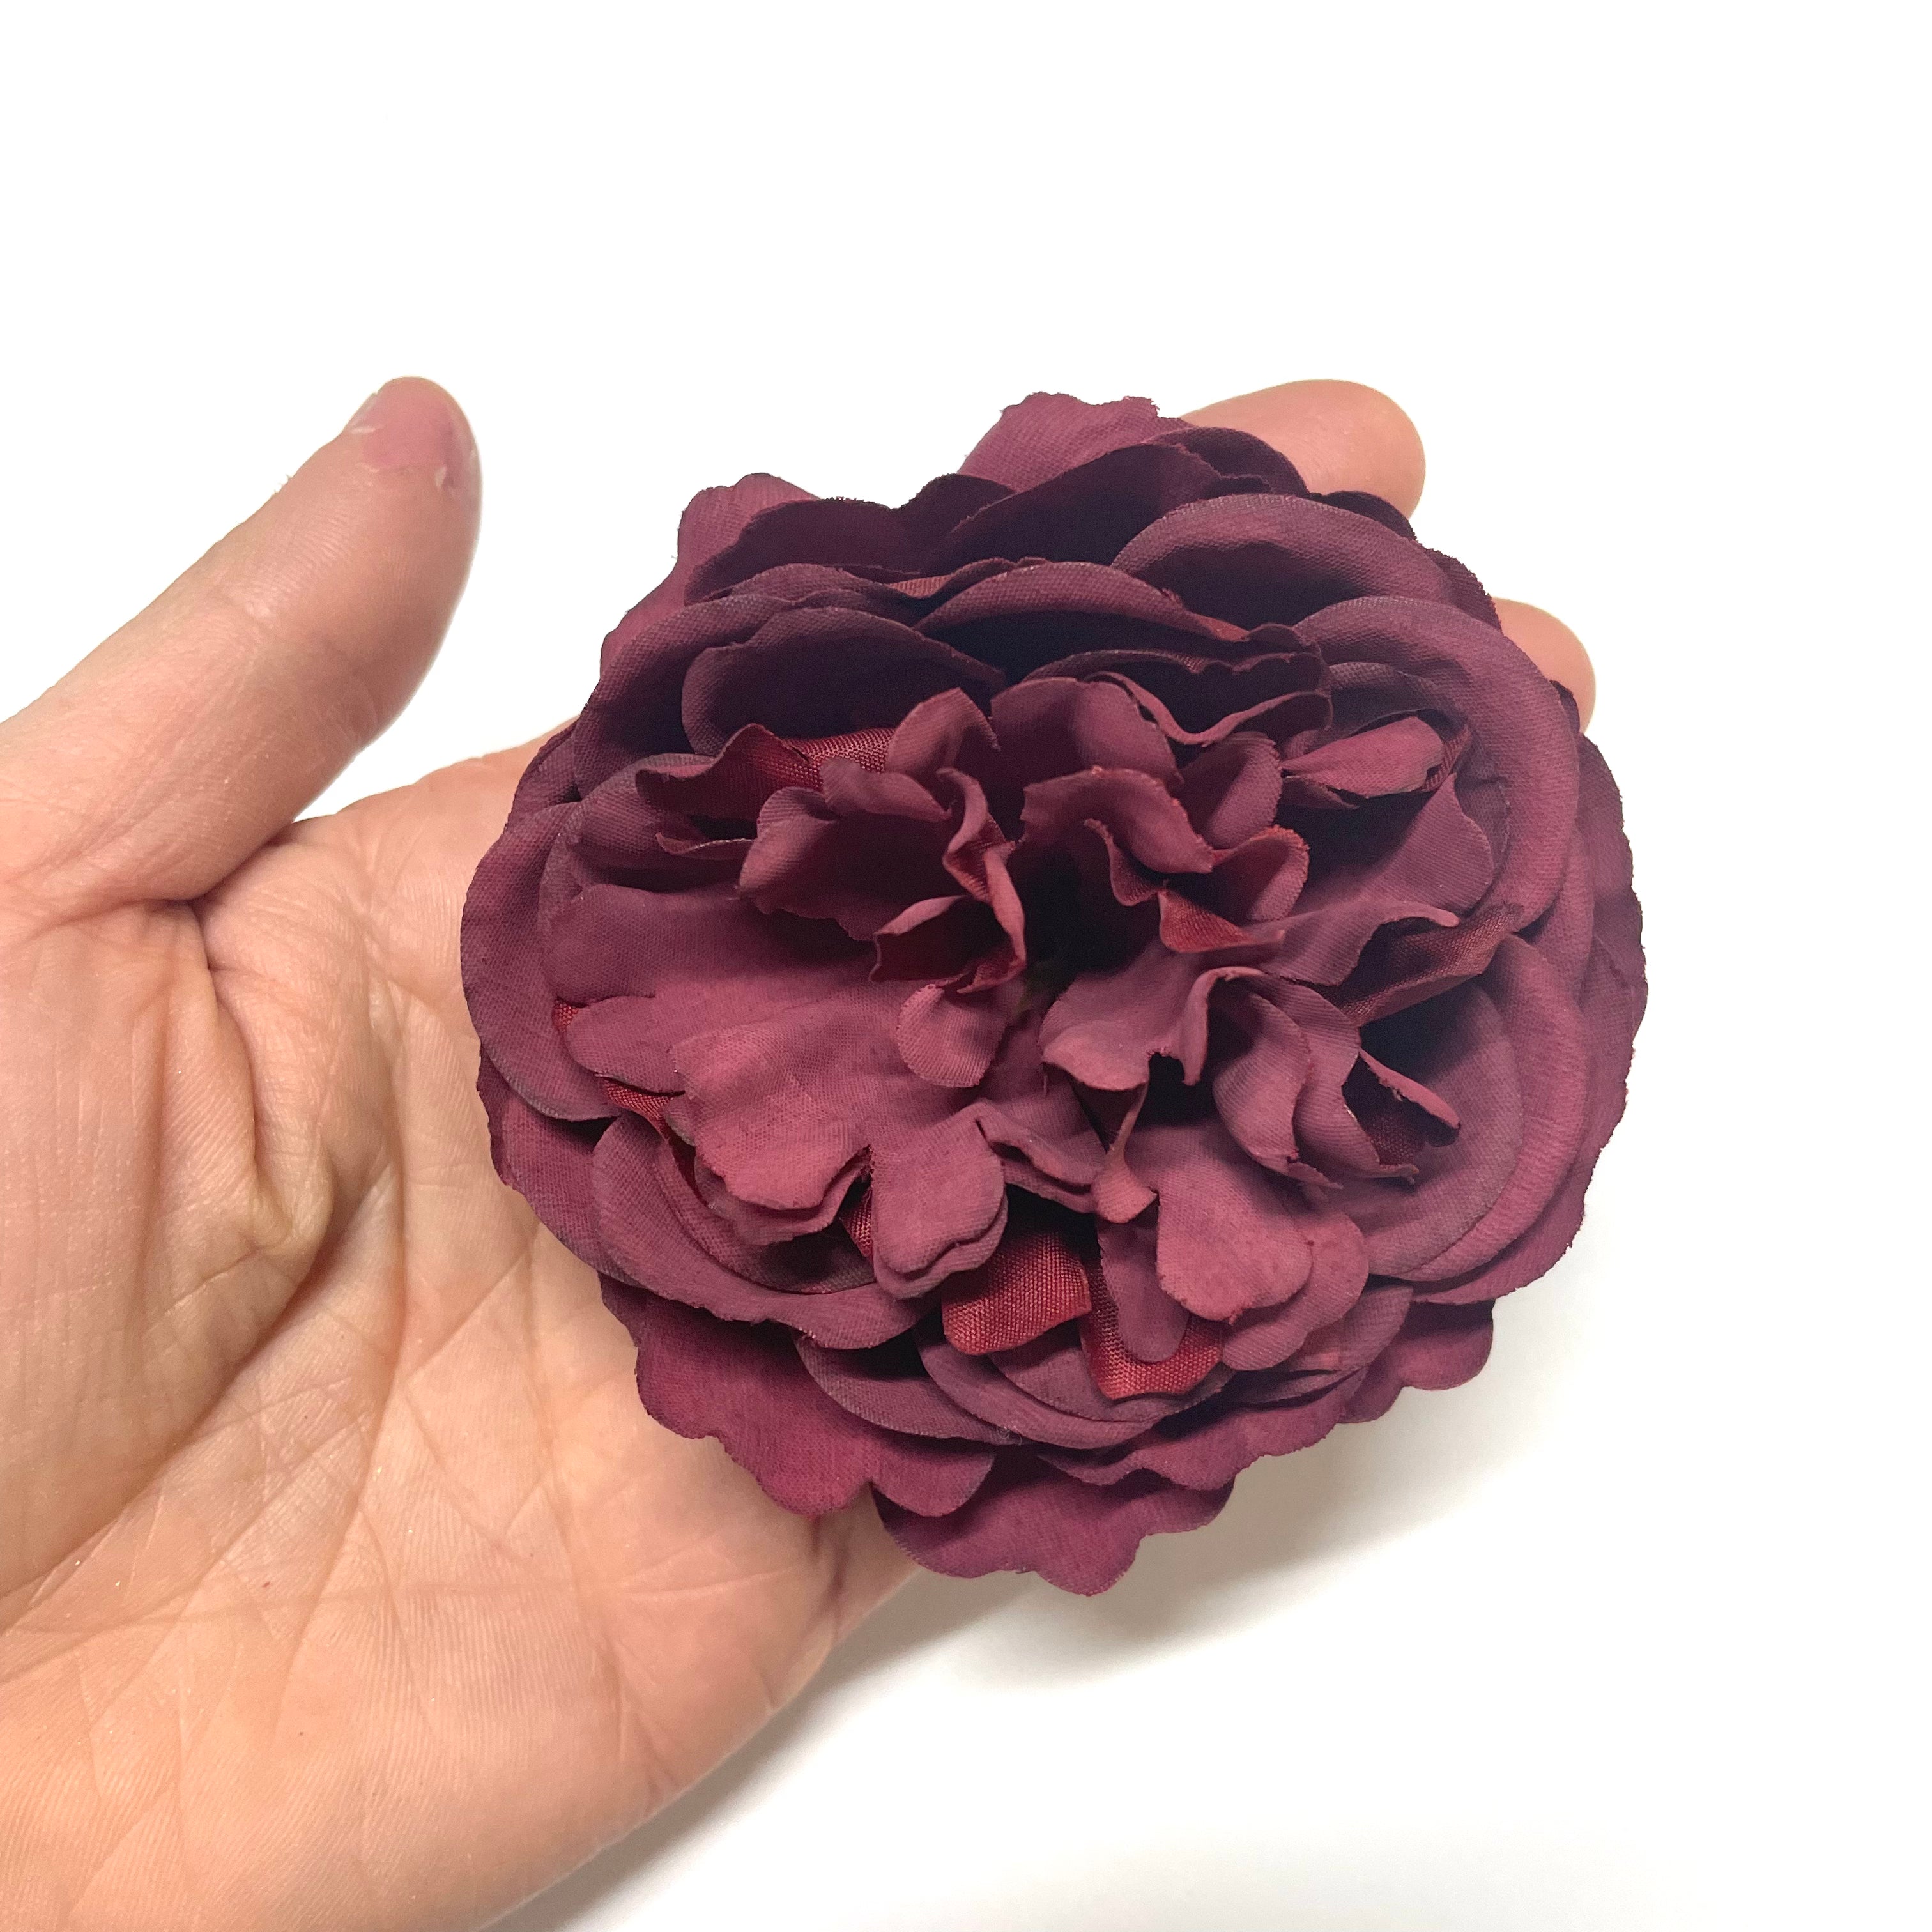 Artificial Silk Flower Head - Burgundy Rose Style 60 - 1pc